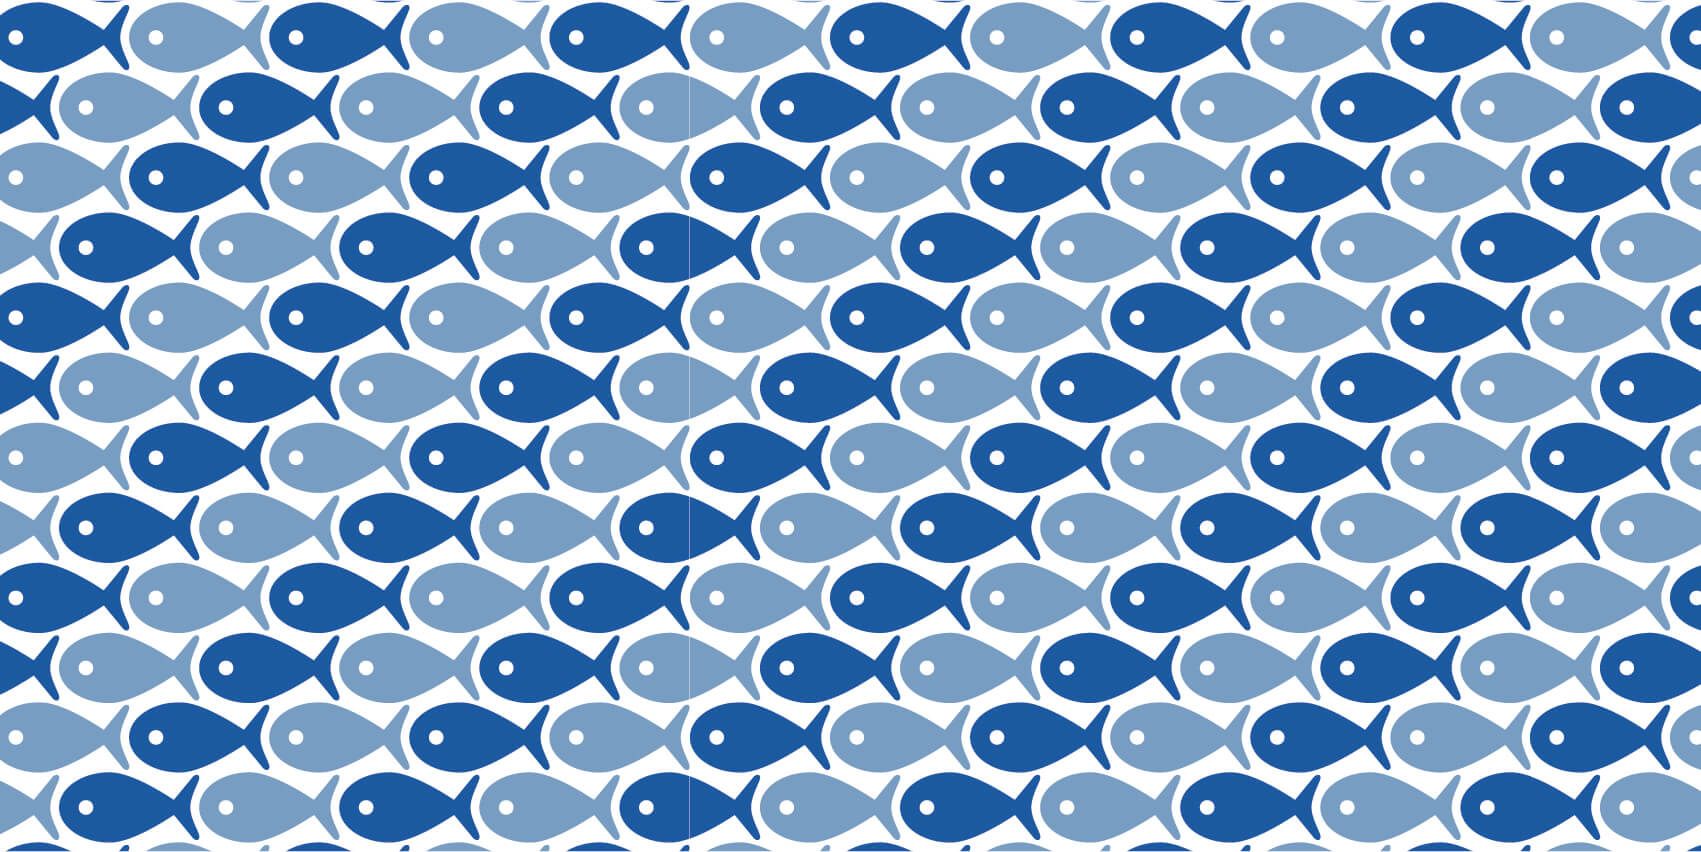 Animaux aquatiques - Poisson bleu - Chambre d'enfants